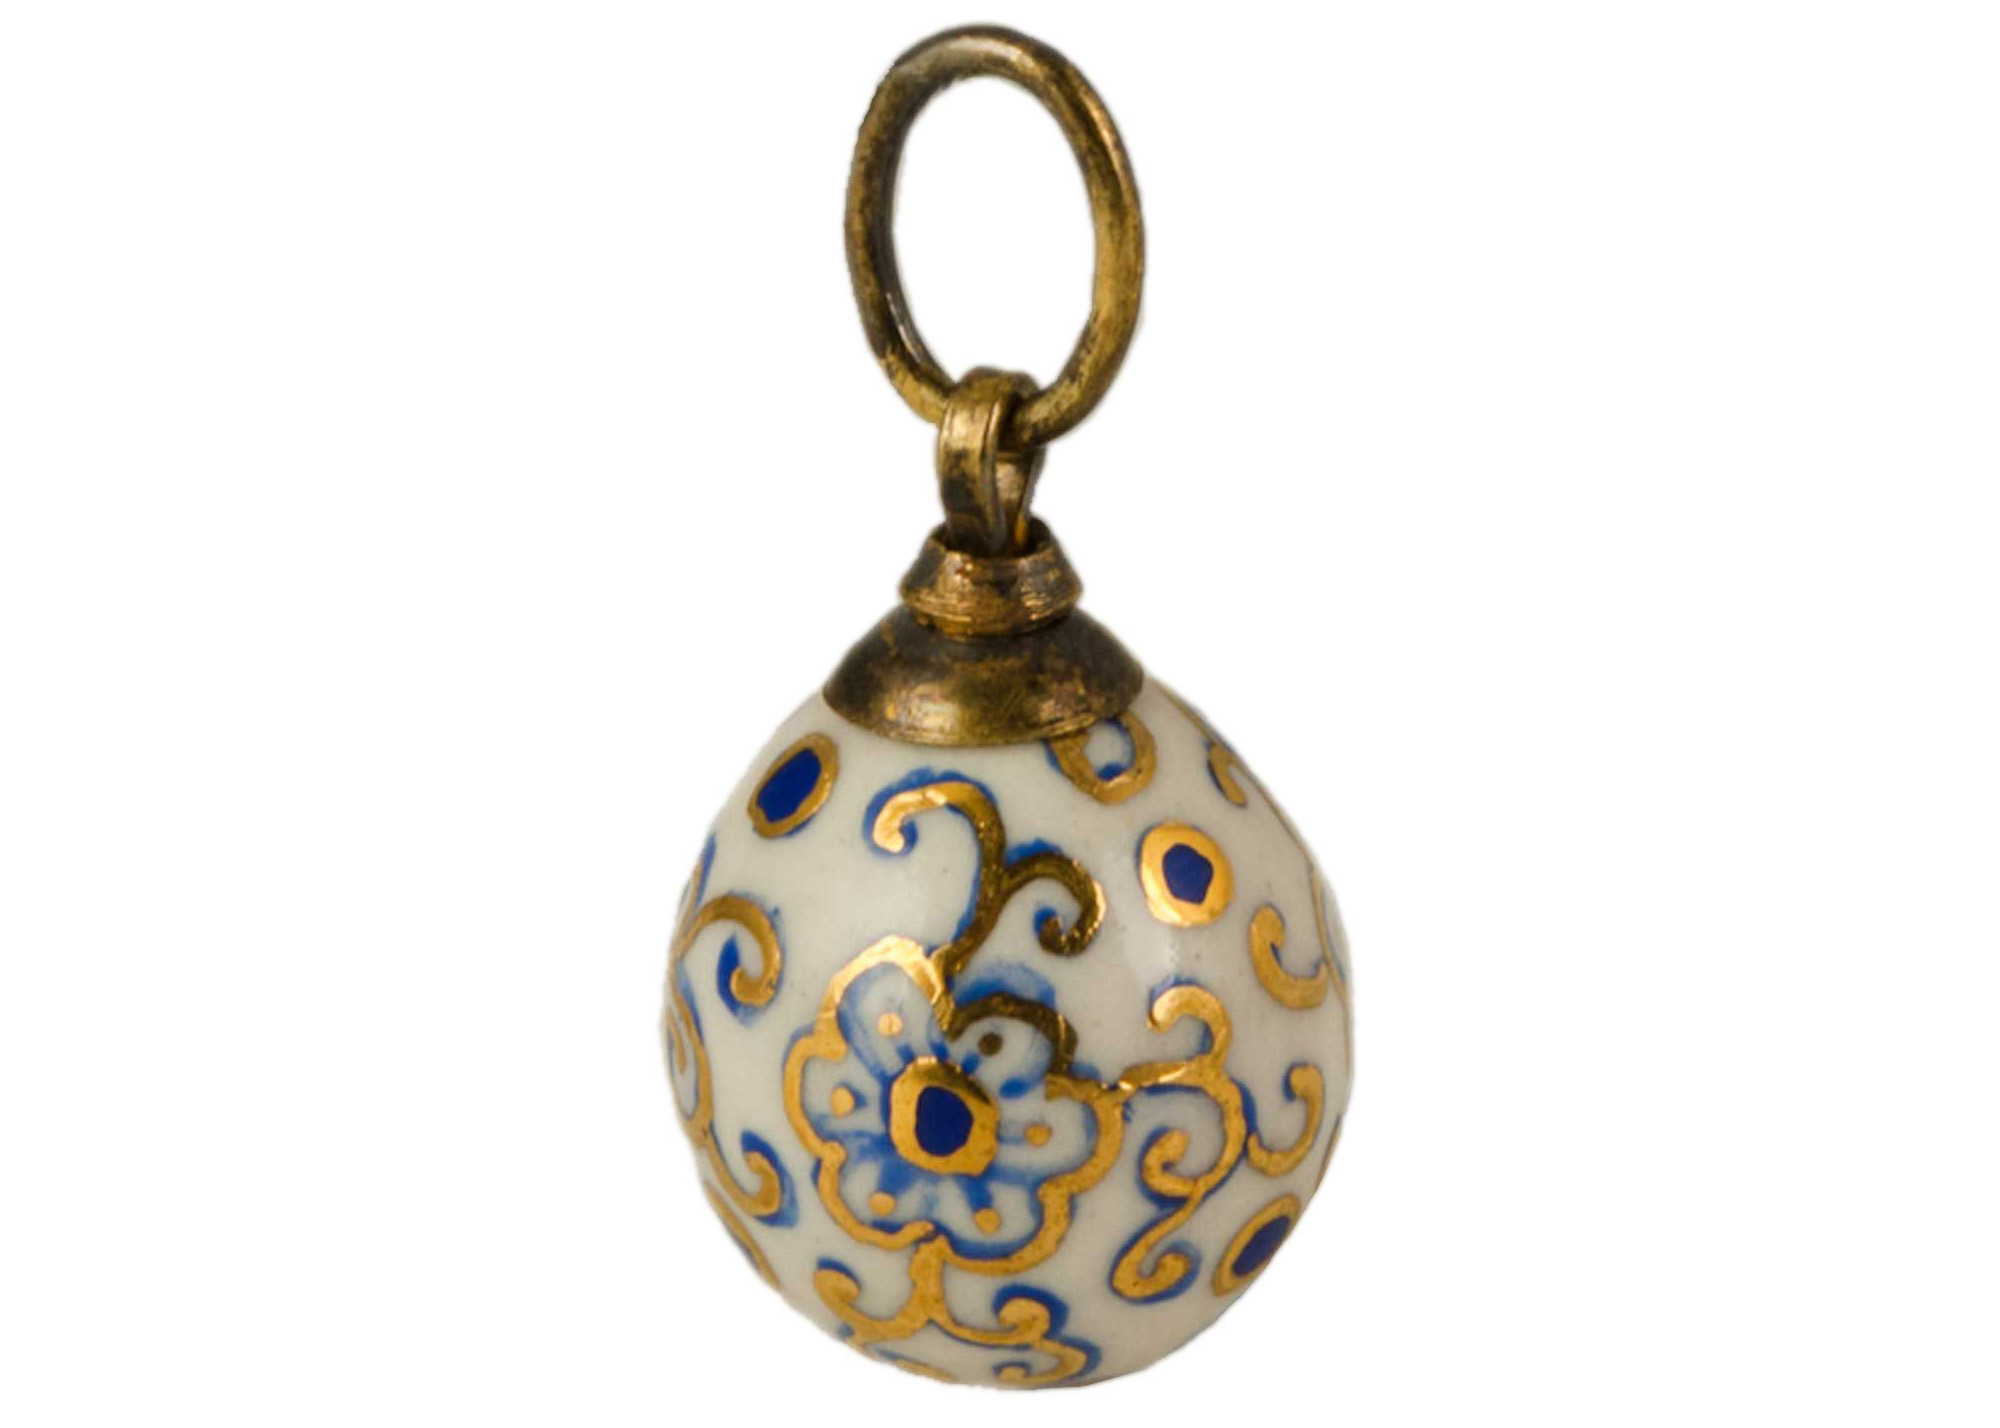 Buy Winding Porcelain Pendant at GoldenCockerel.com